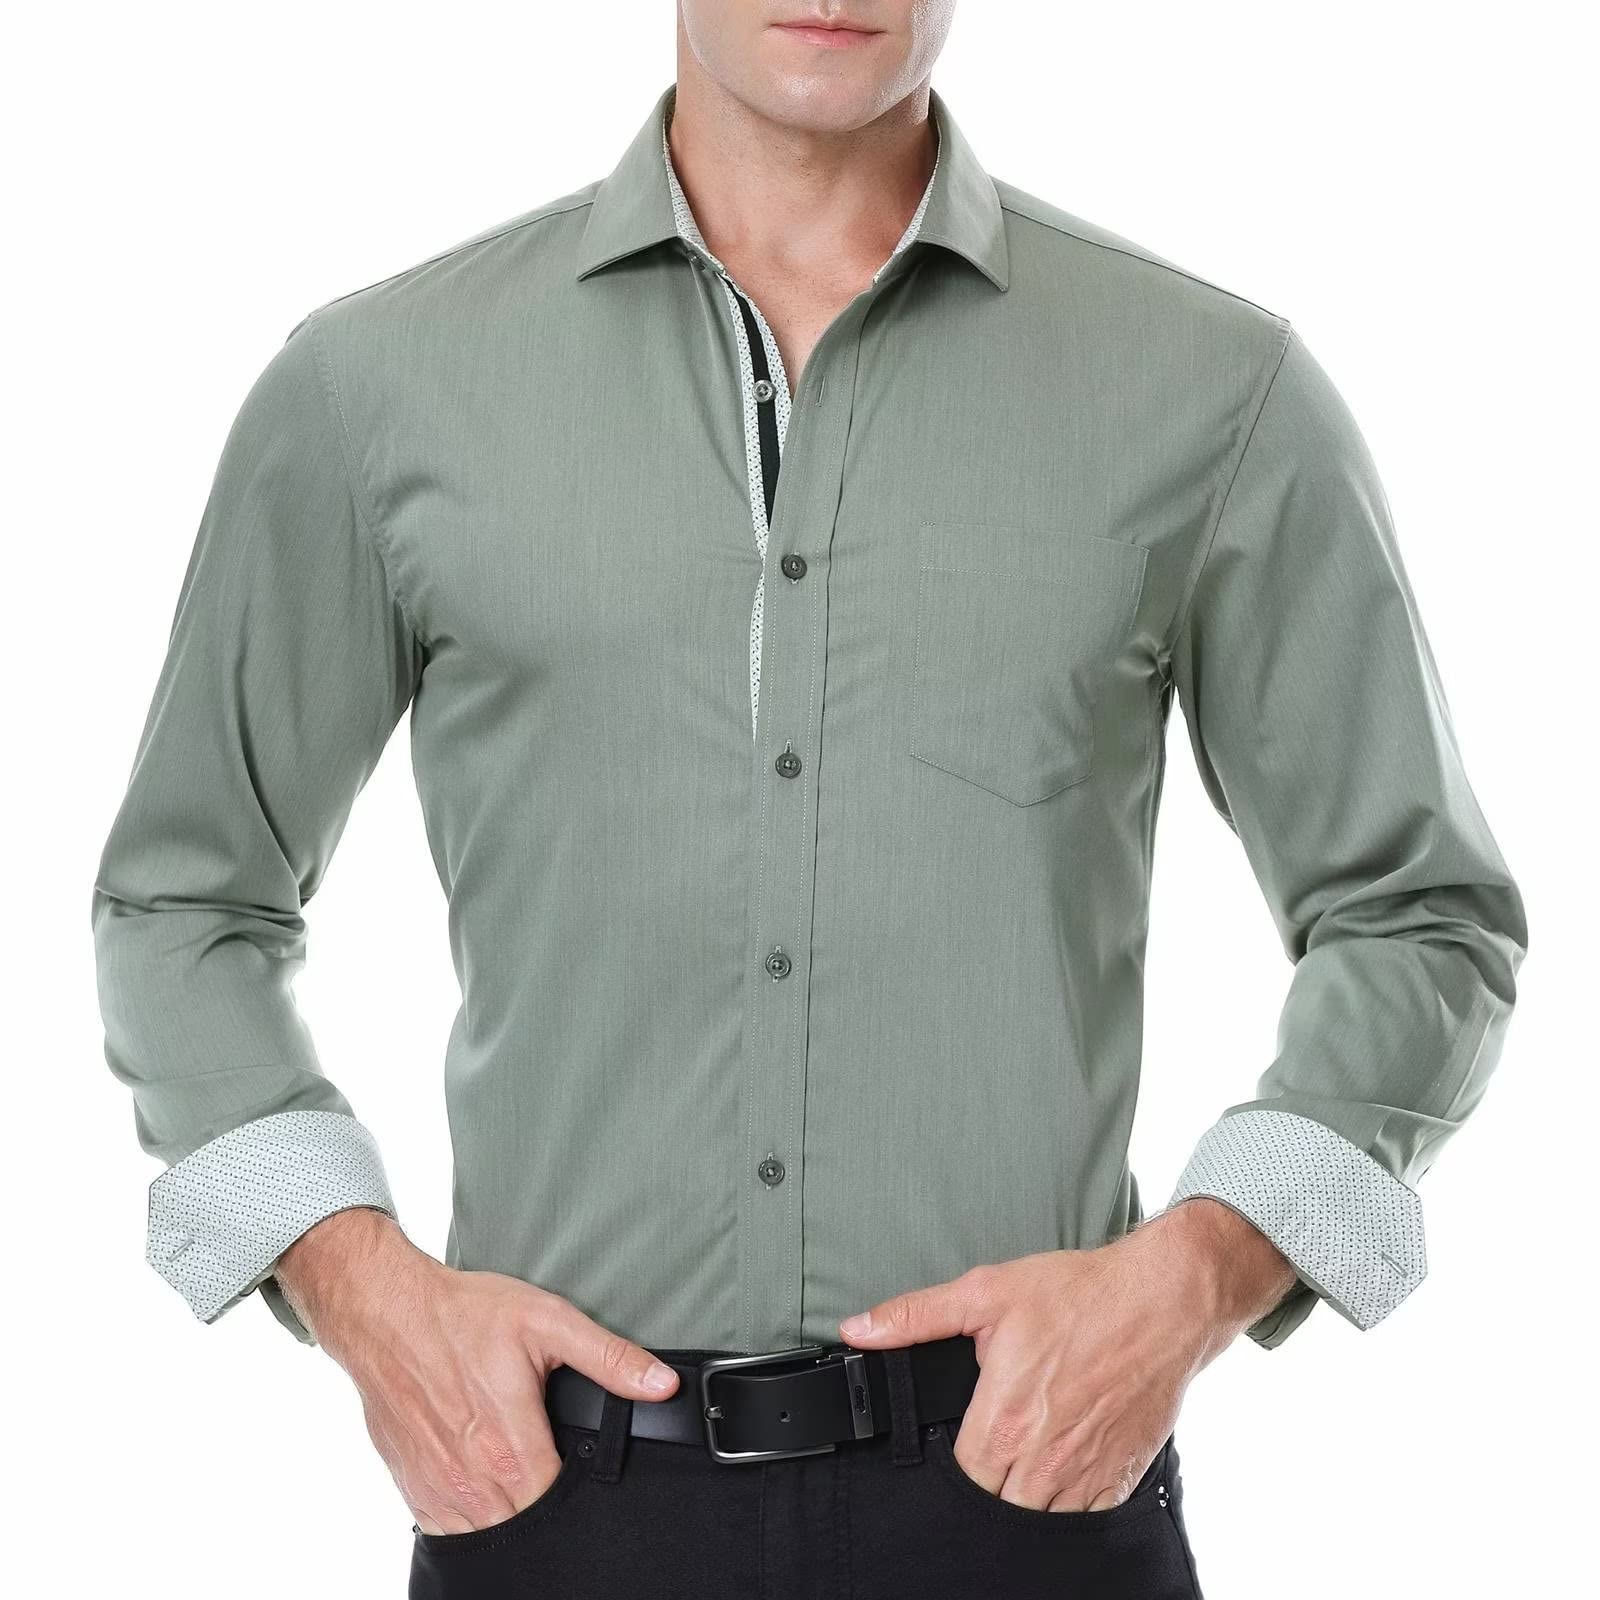 ENSO ELARDER Men's Dress Shirt Wrinkle Free Long Sleeve Formal Shirts Casual Button Down Shirts Untucked Stretch Regular Fit Shirts(Olivine,L)